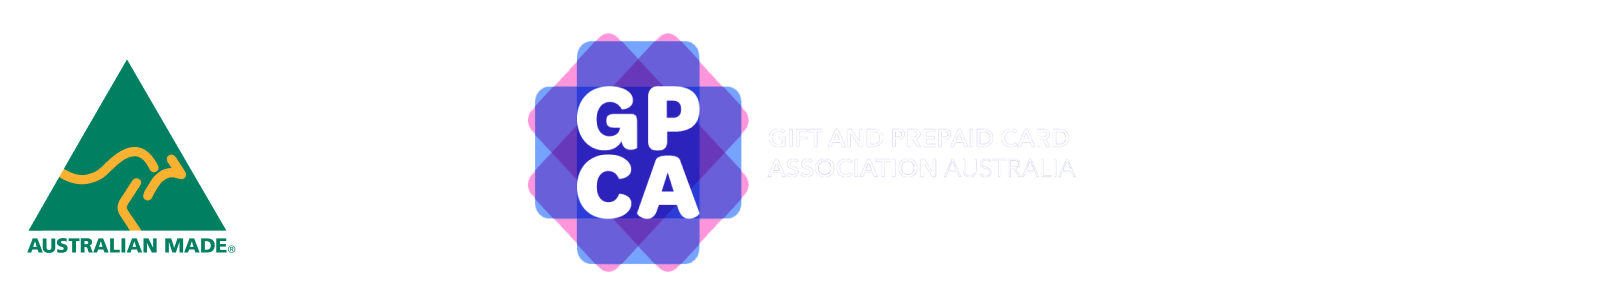 Australian made, Gift and prepaid card association and Australia payroll association